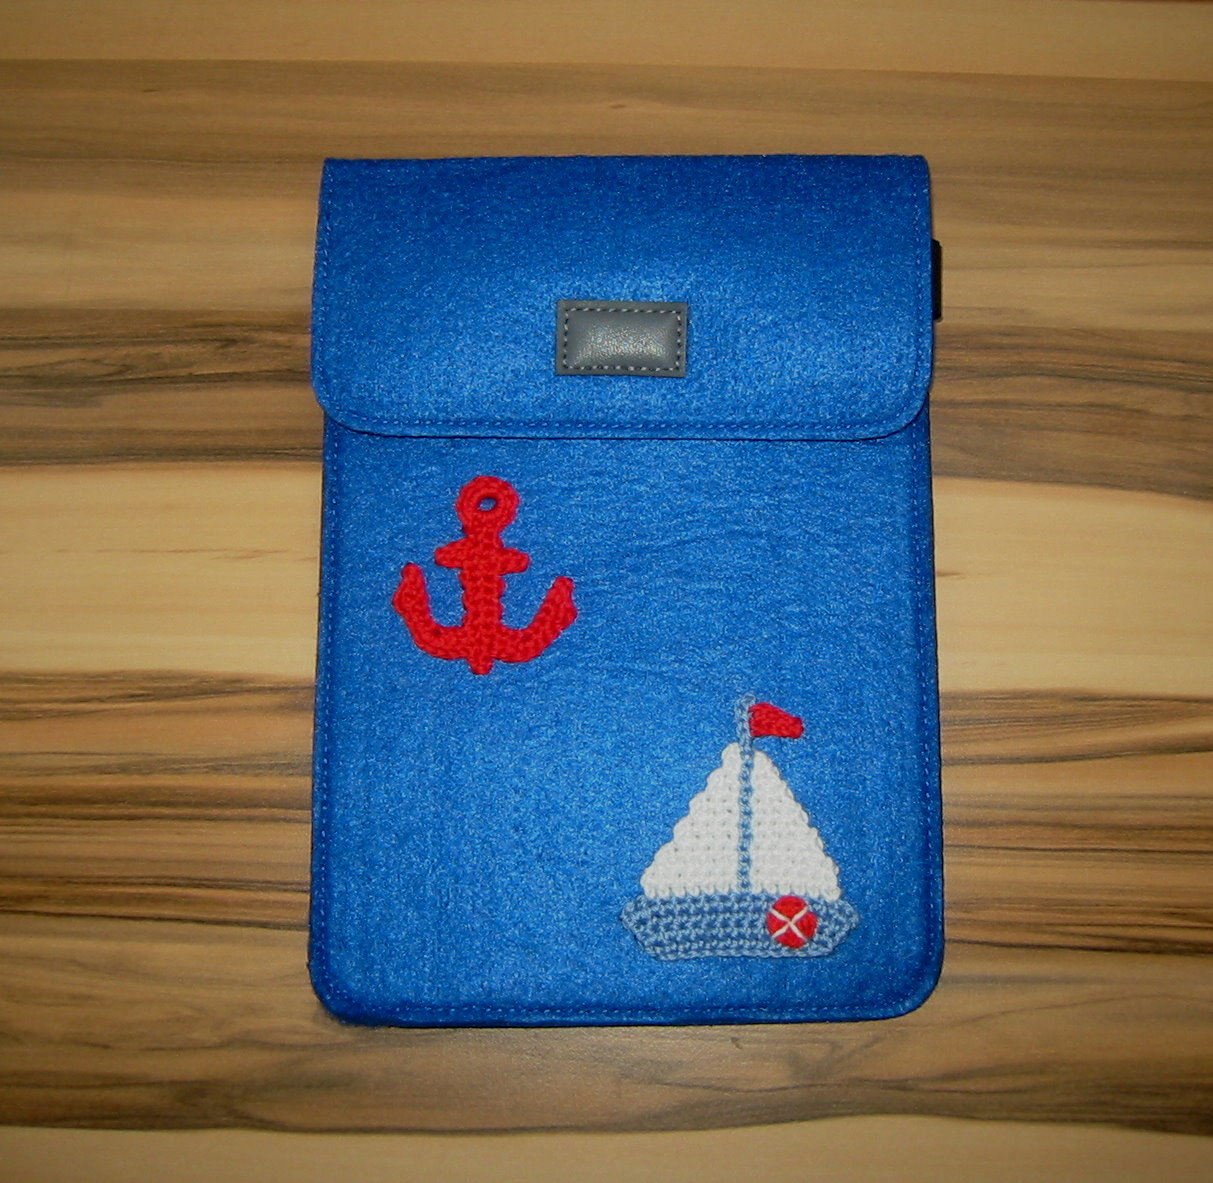 Kleine maritime Tablethülle mit Segelboot-Applikation